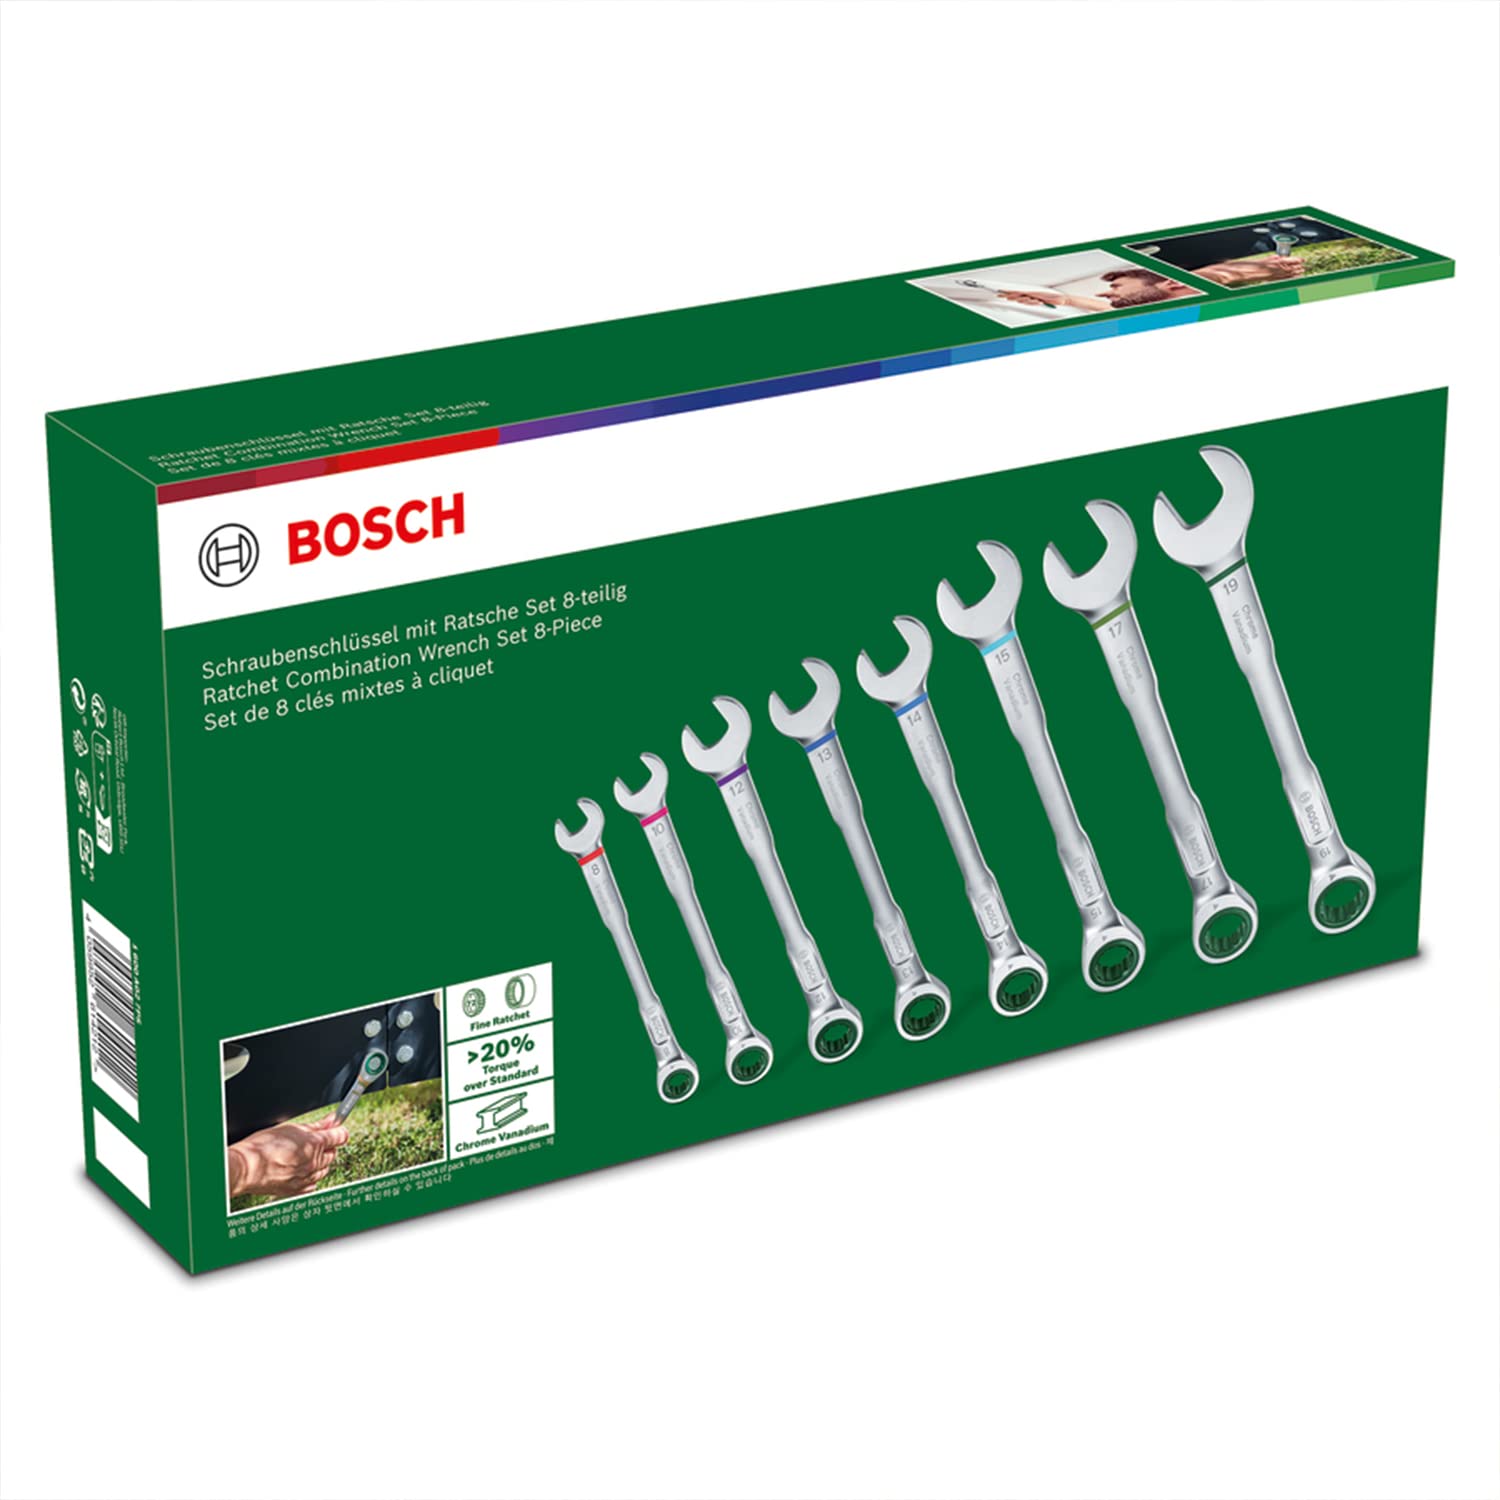 Bosch DIY Ratchet Combination Wrench Set 8-piece 1600A027PS